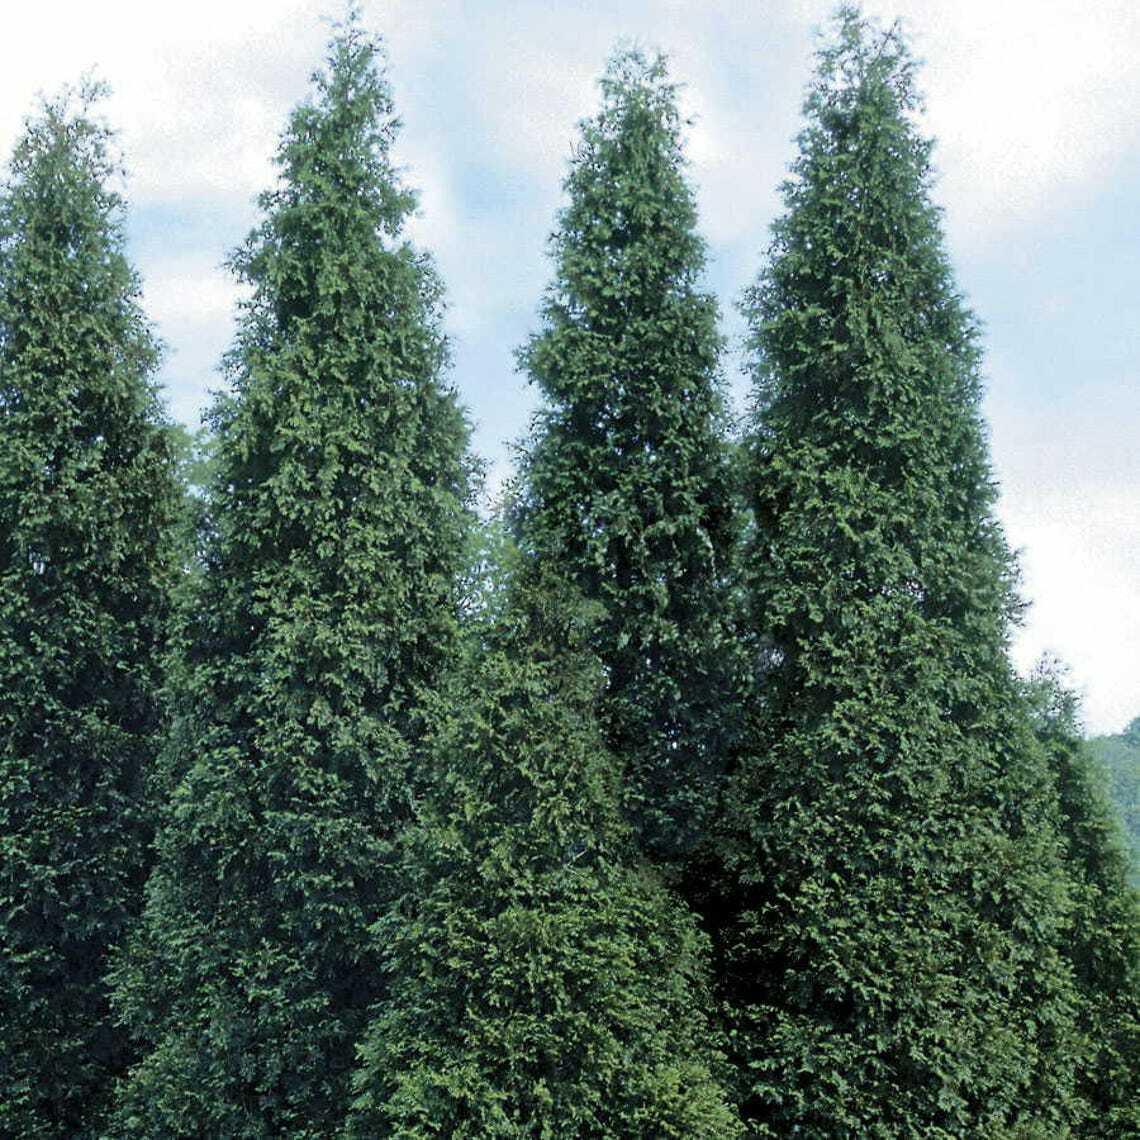 90 Thuja Green Giant Arborvitae Trees/Shrubs - 12-16" Tall Live Plants - 3" Pots - The Nursery Center